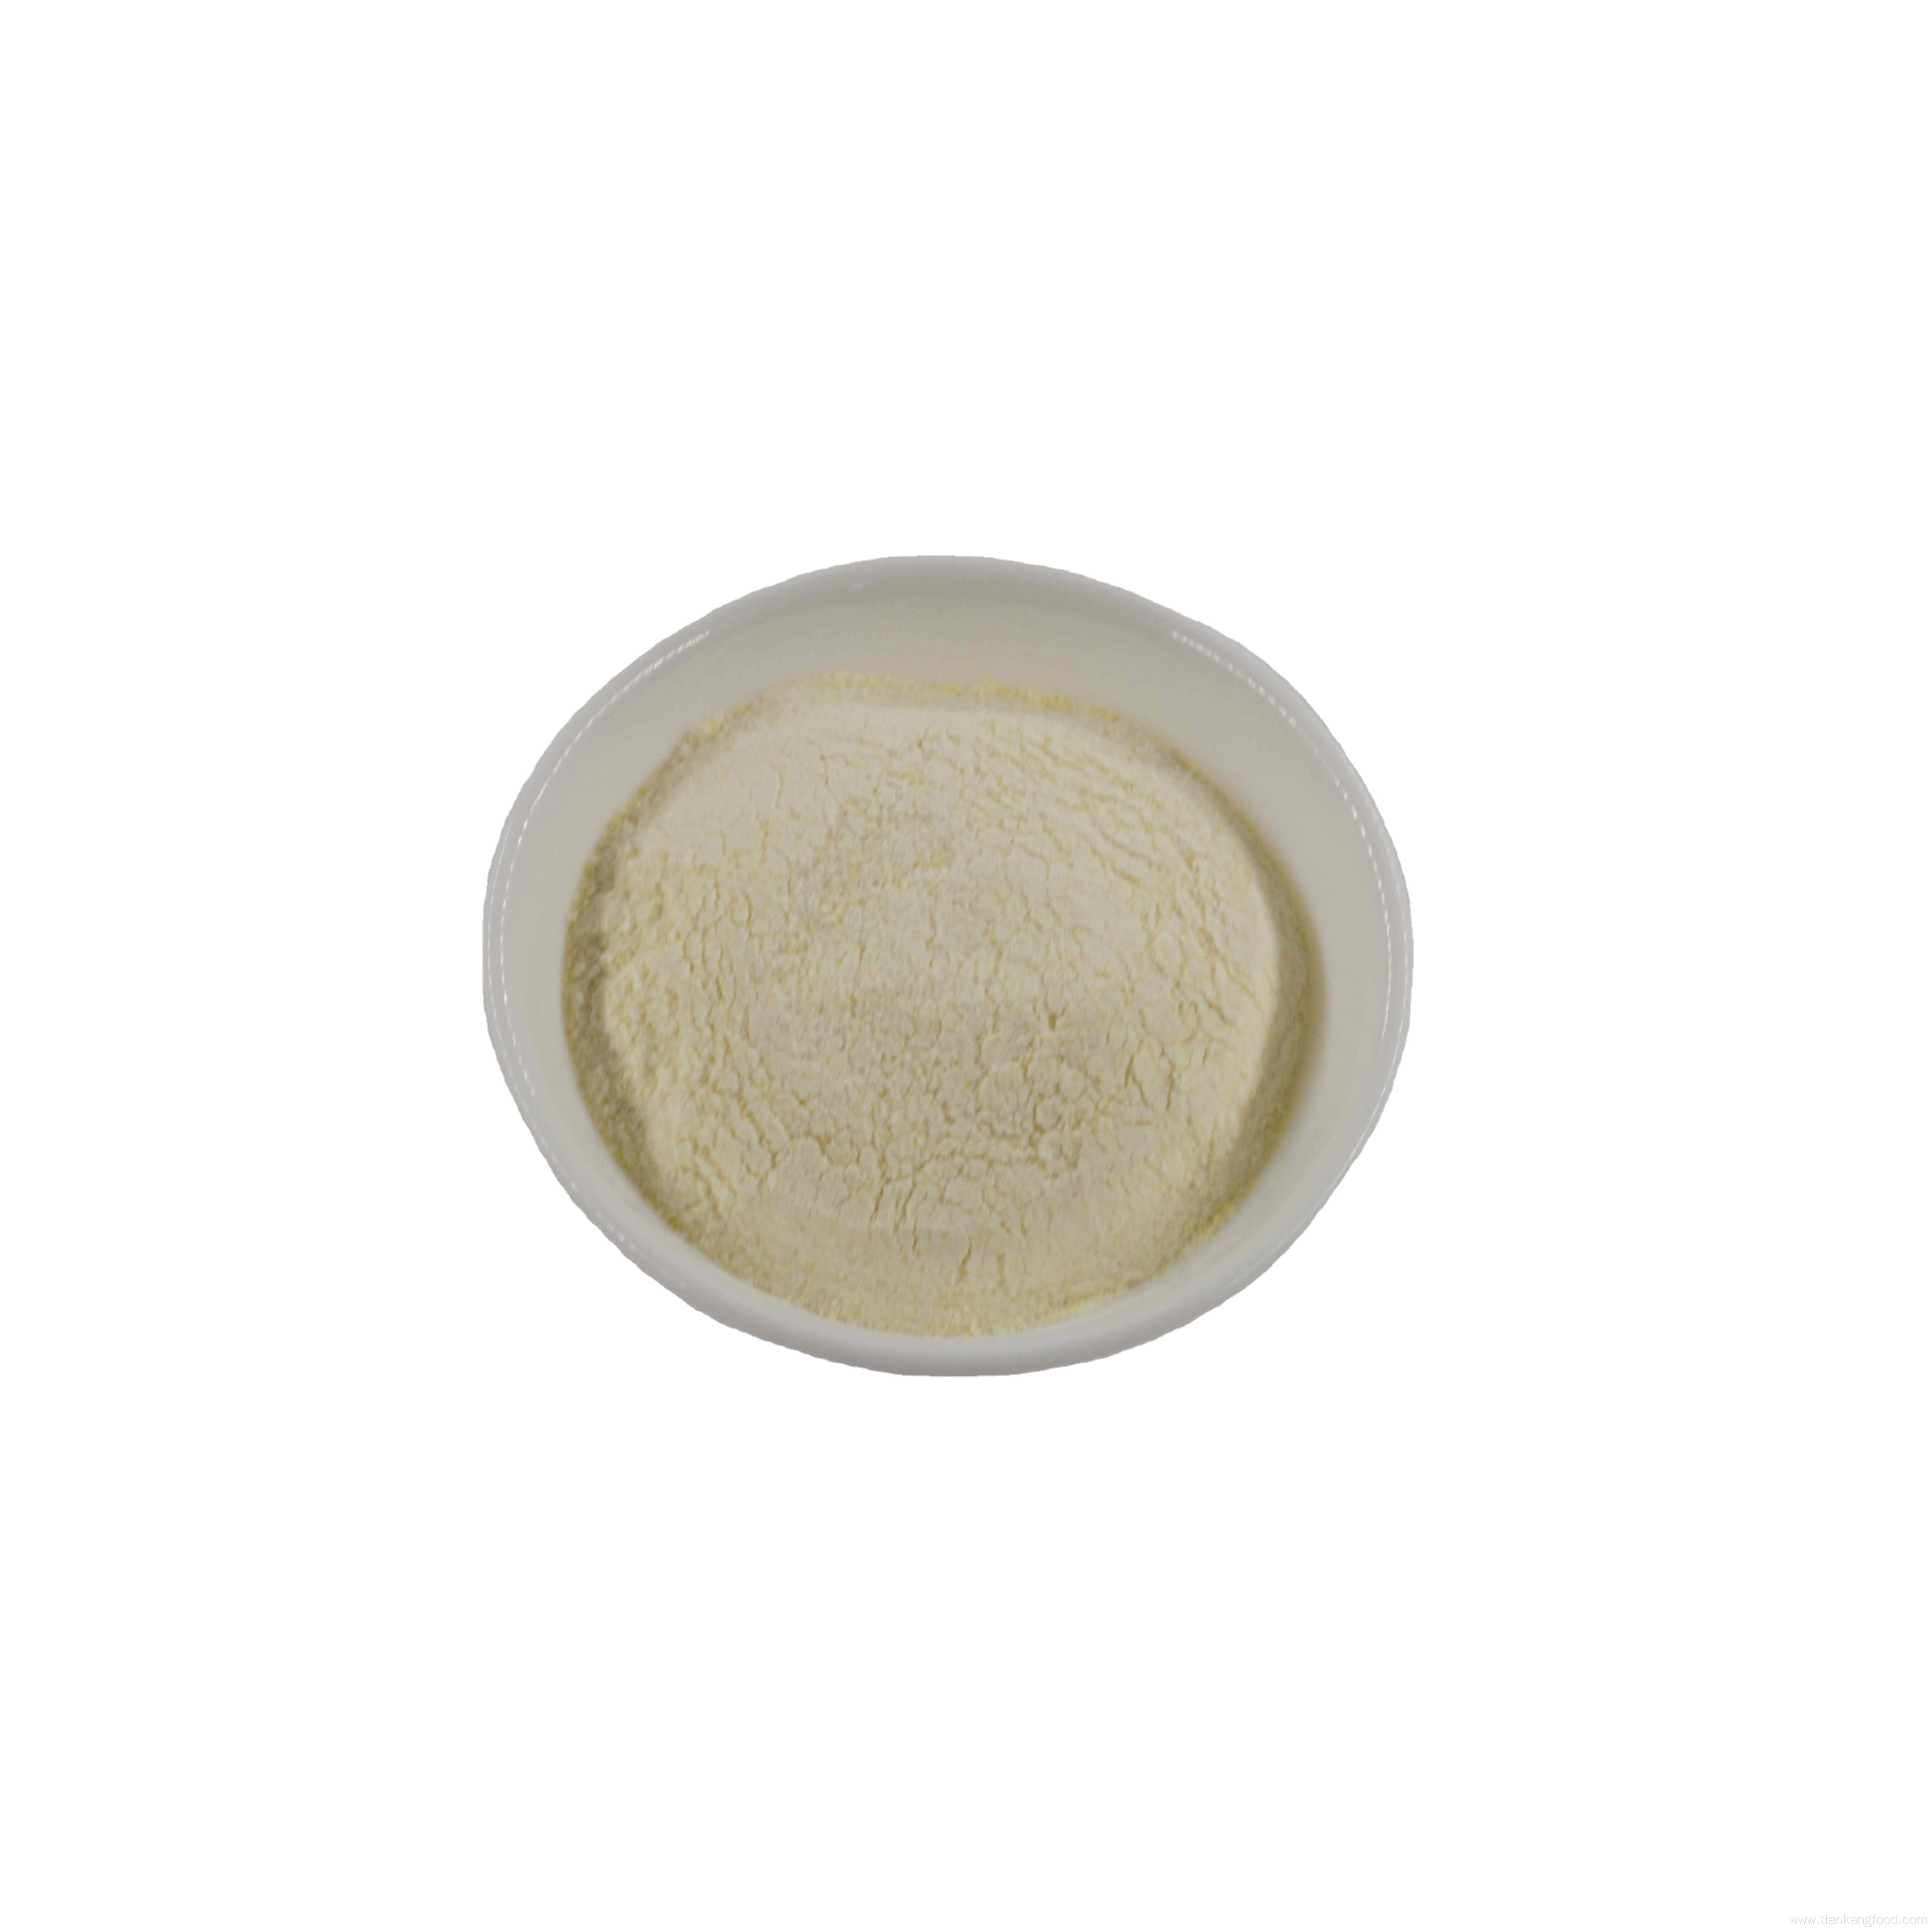 Chinese Dehydrated Garlic Powder